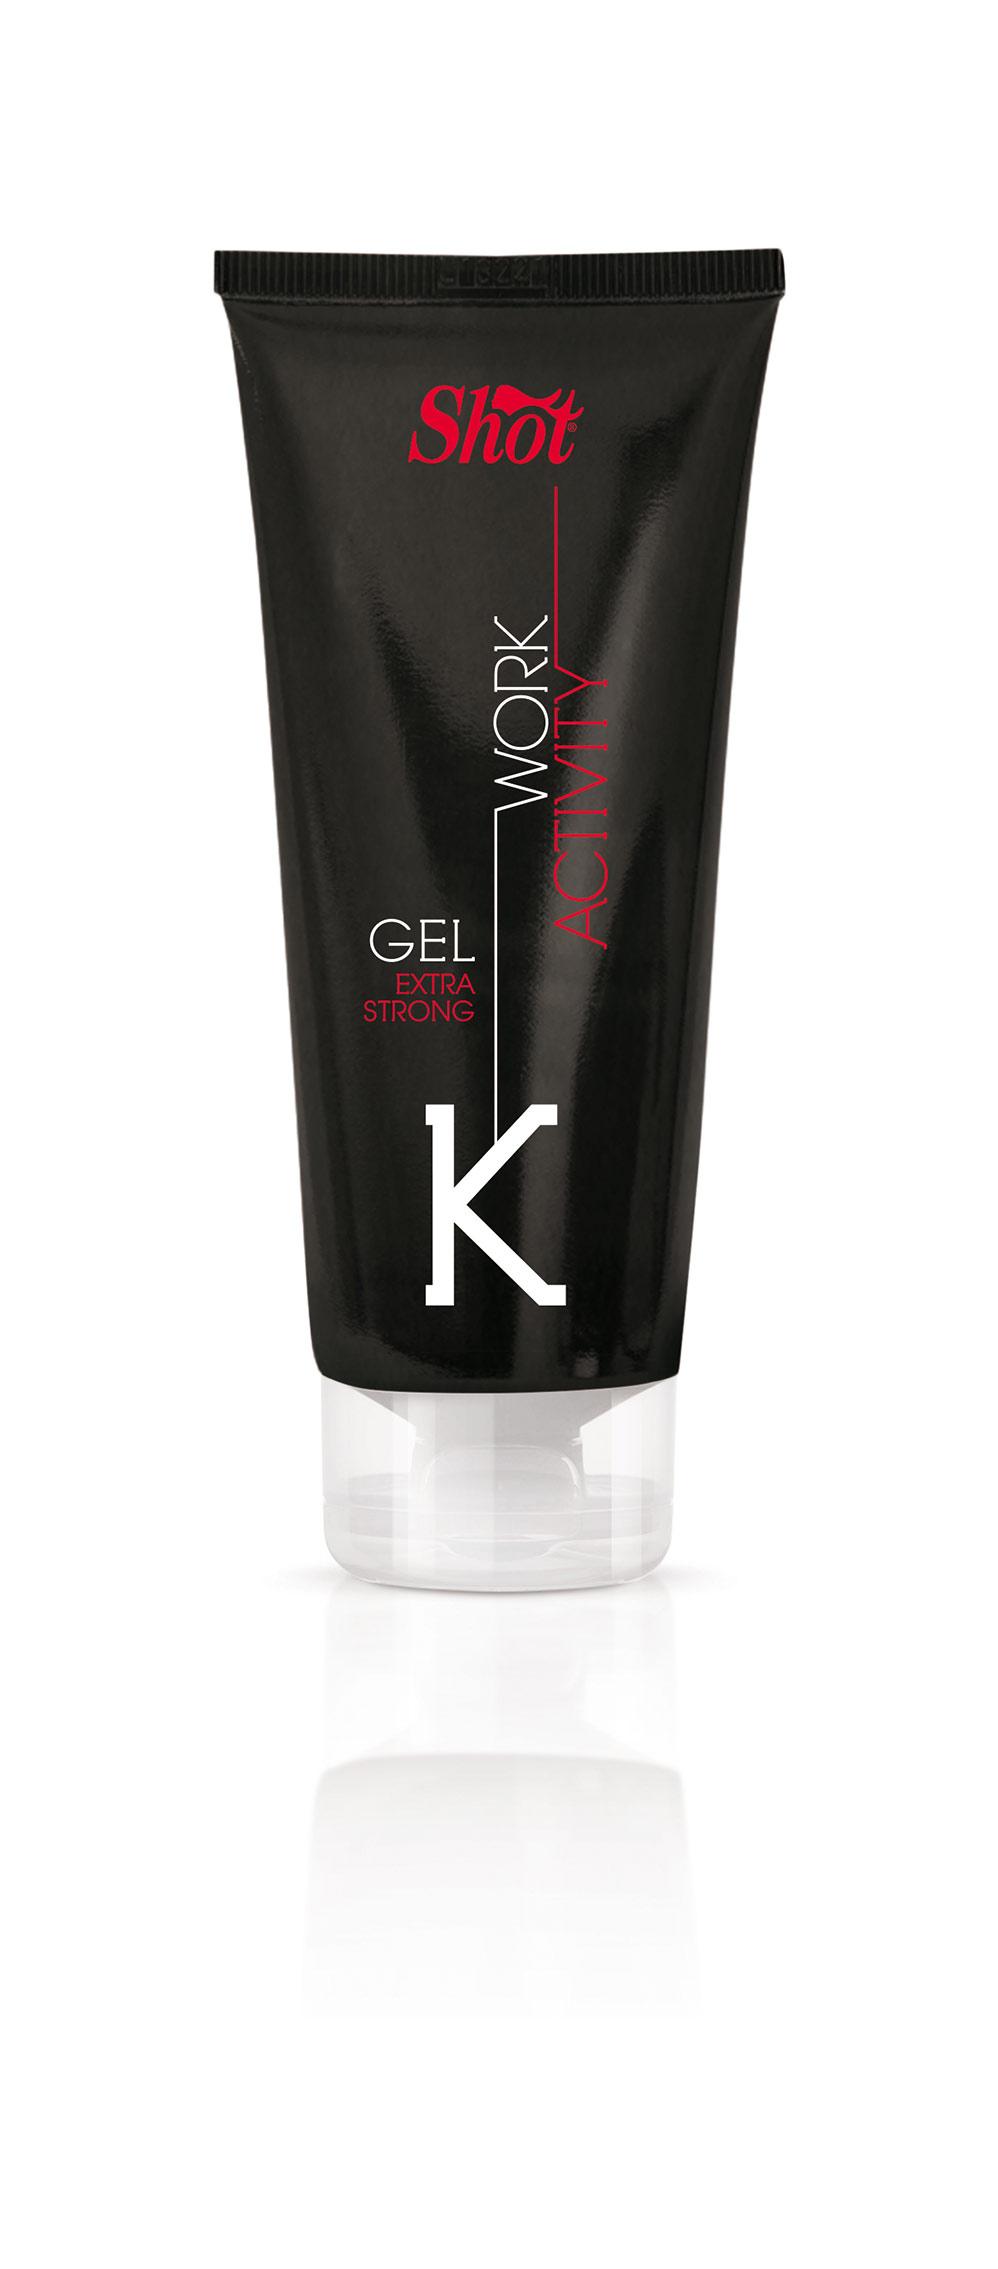 gel work activity k linea finish capelli shot alta qualità gel 